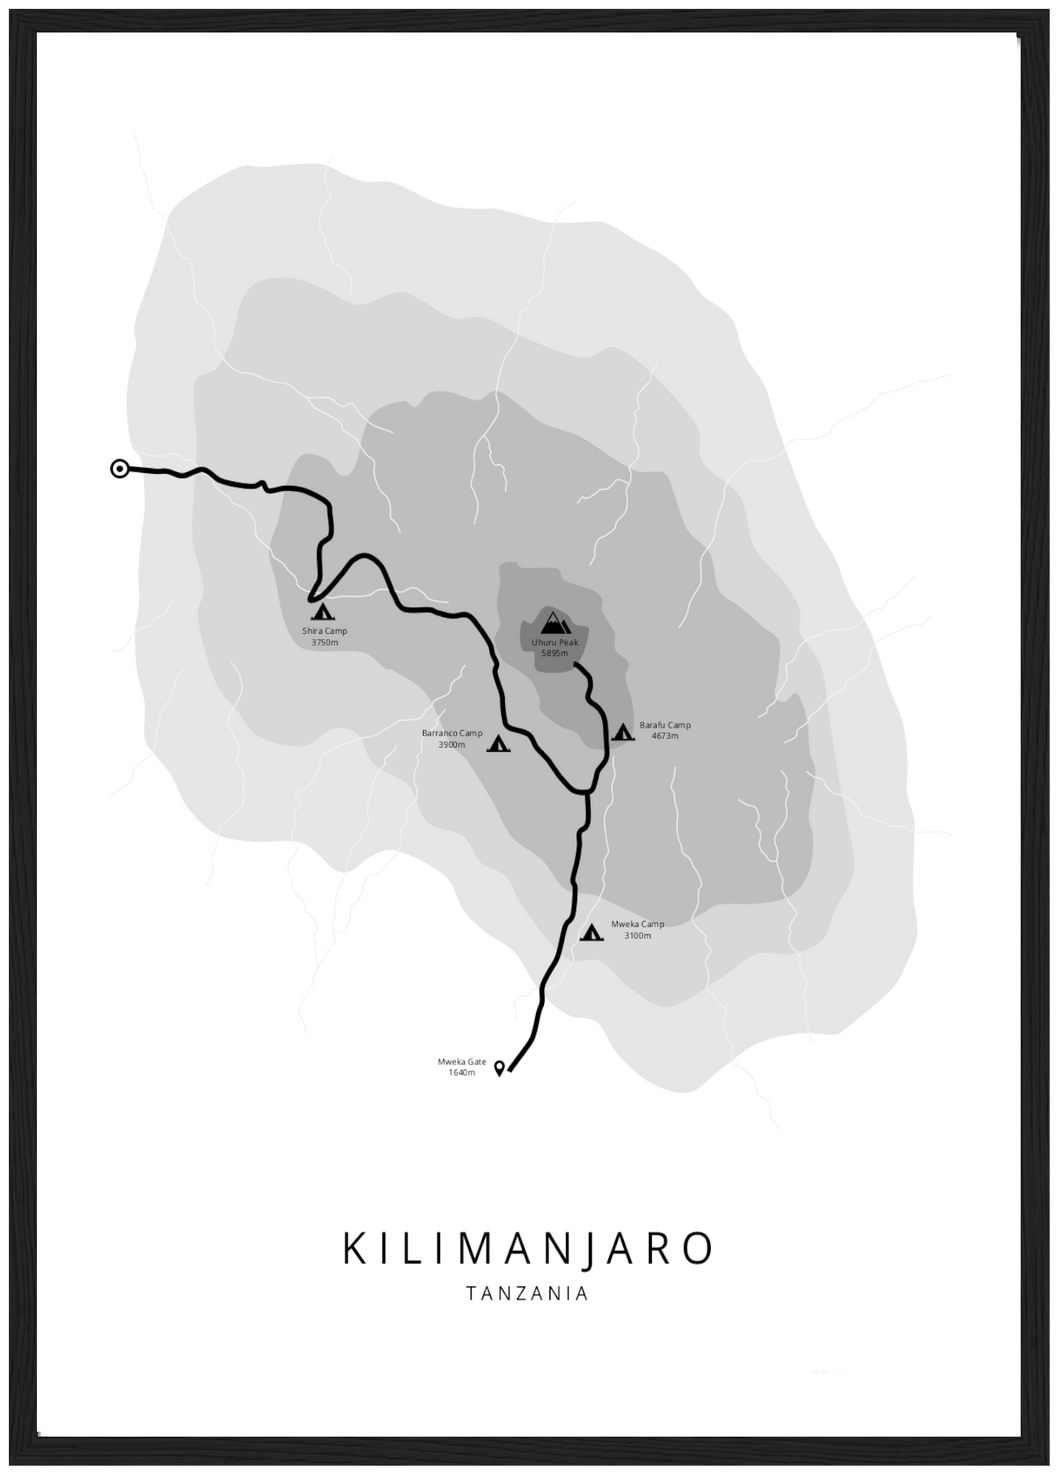 Kilimanjaro poster (Lemosho)